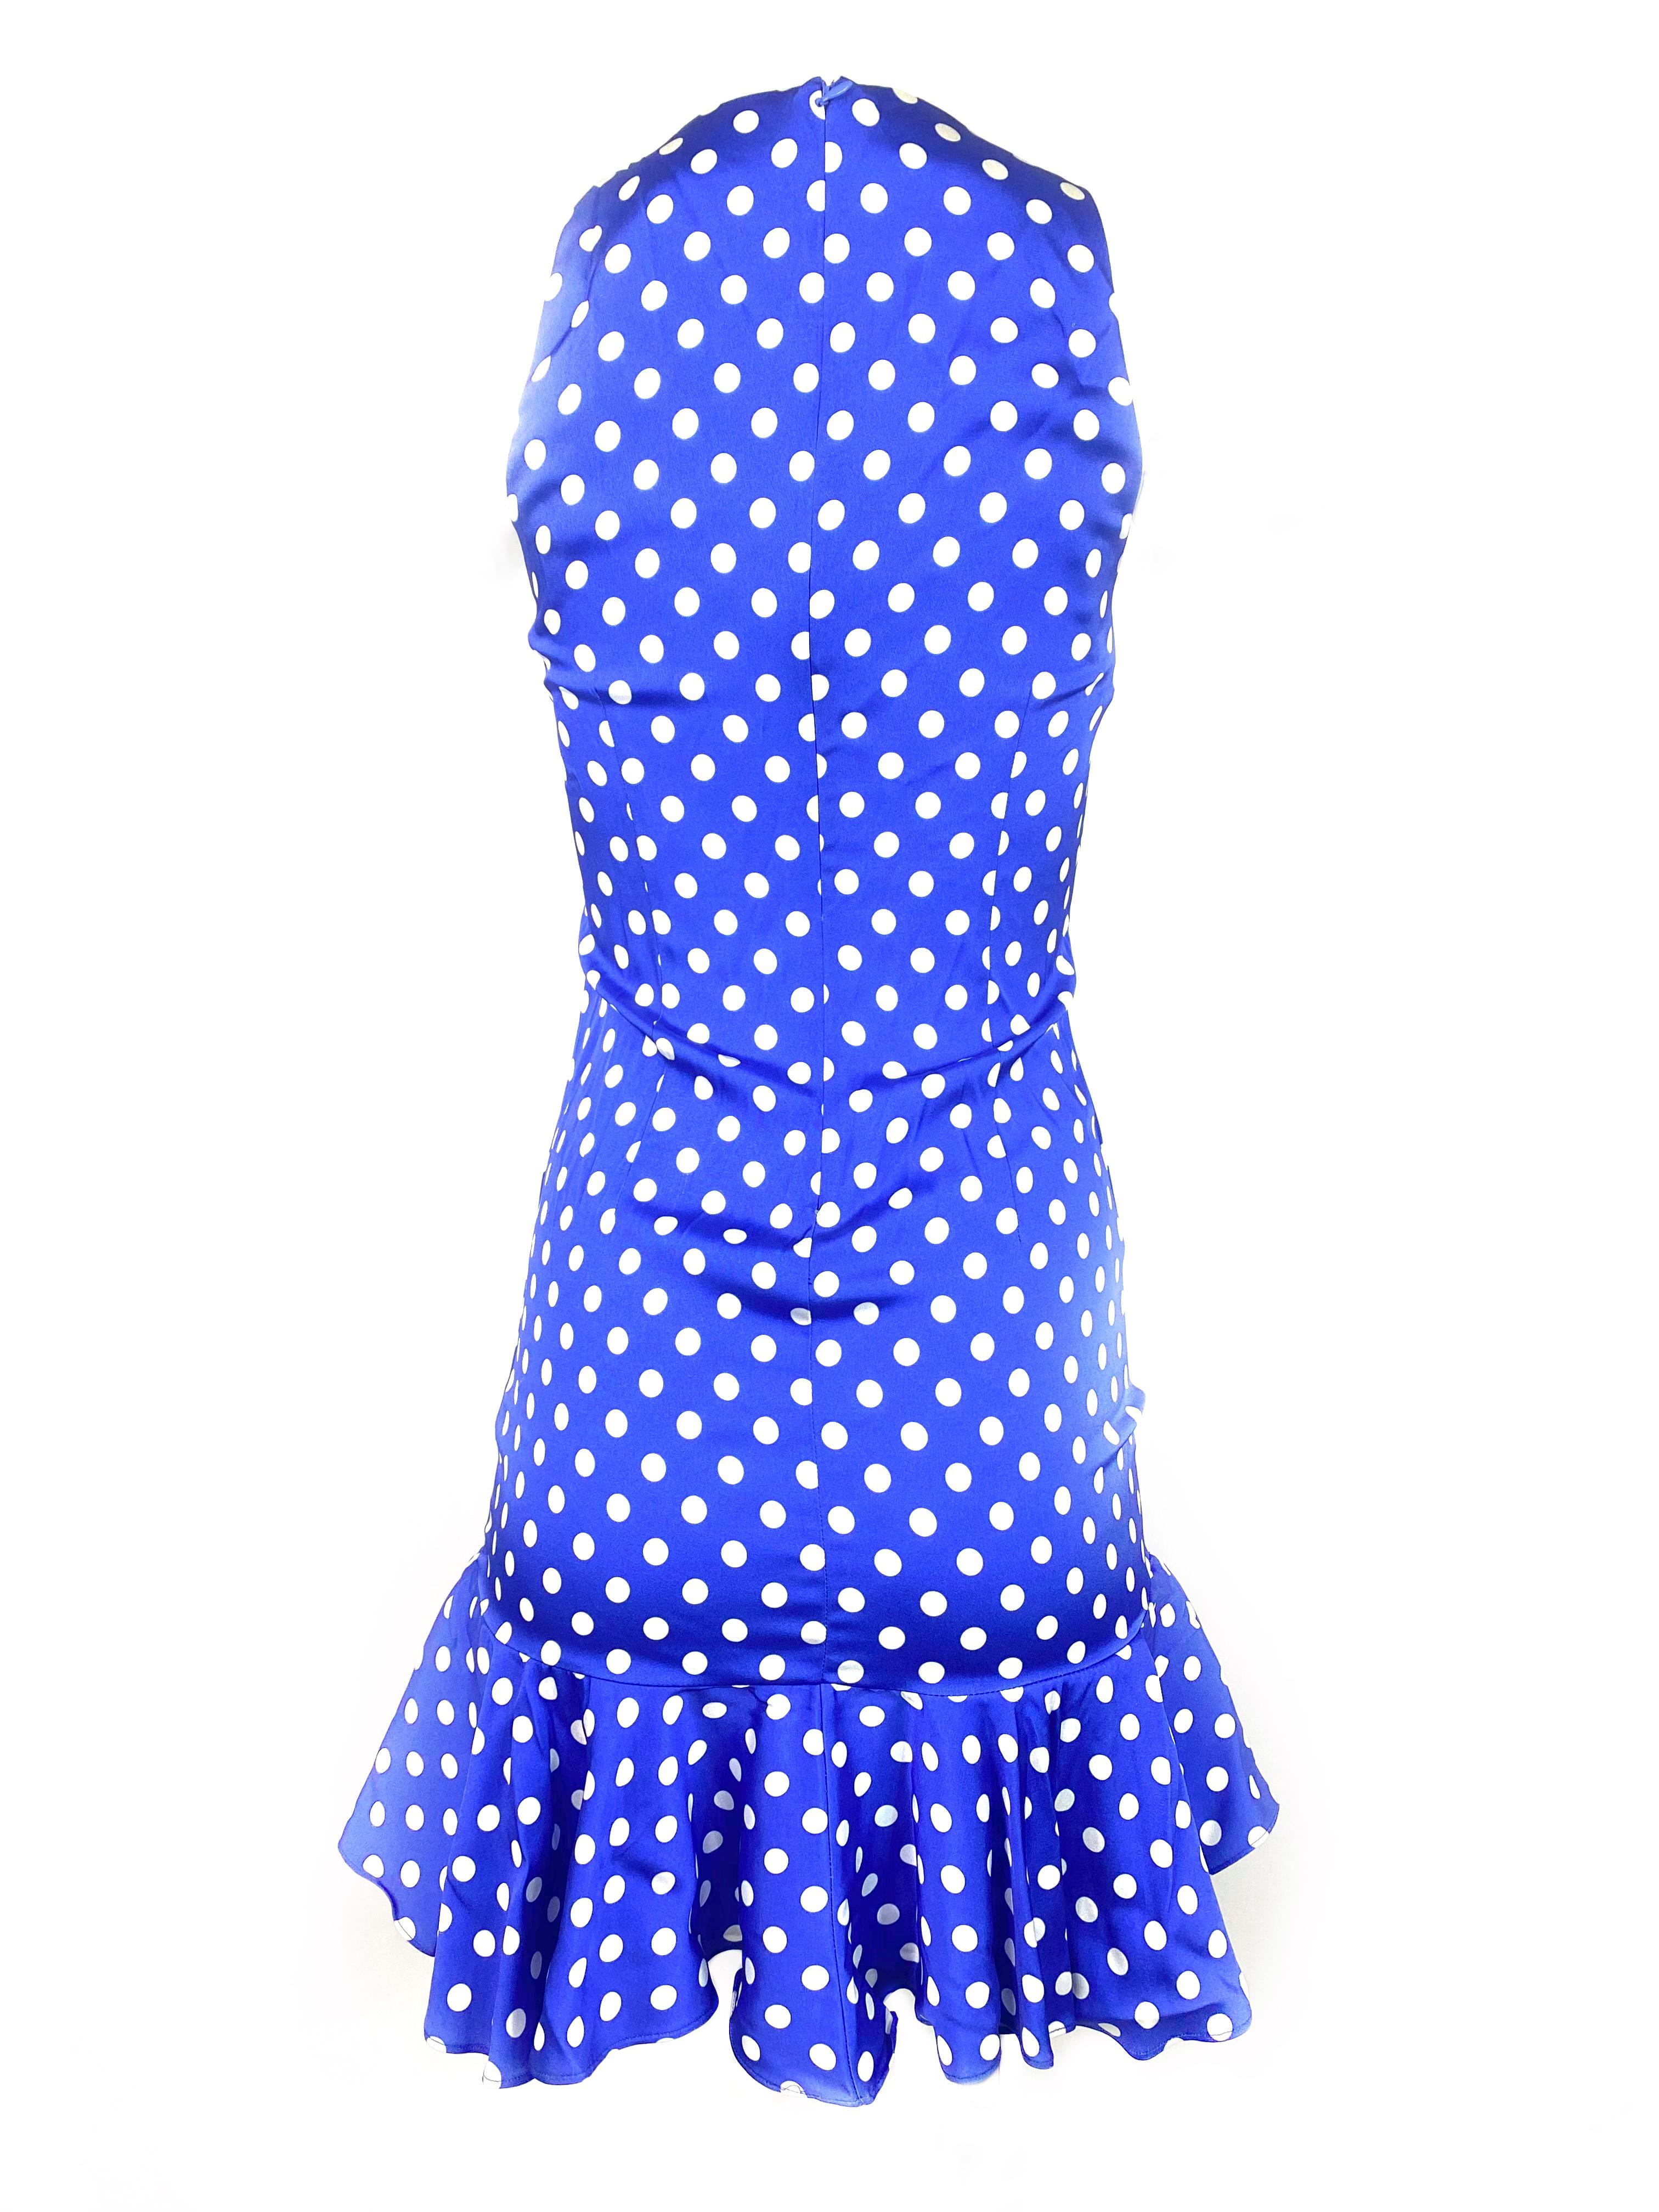 Women's Caroline Consta Audrina Blue and White Polka Dot Silk Mini Dress w/ Tags 